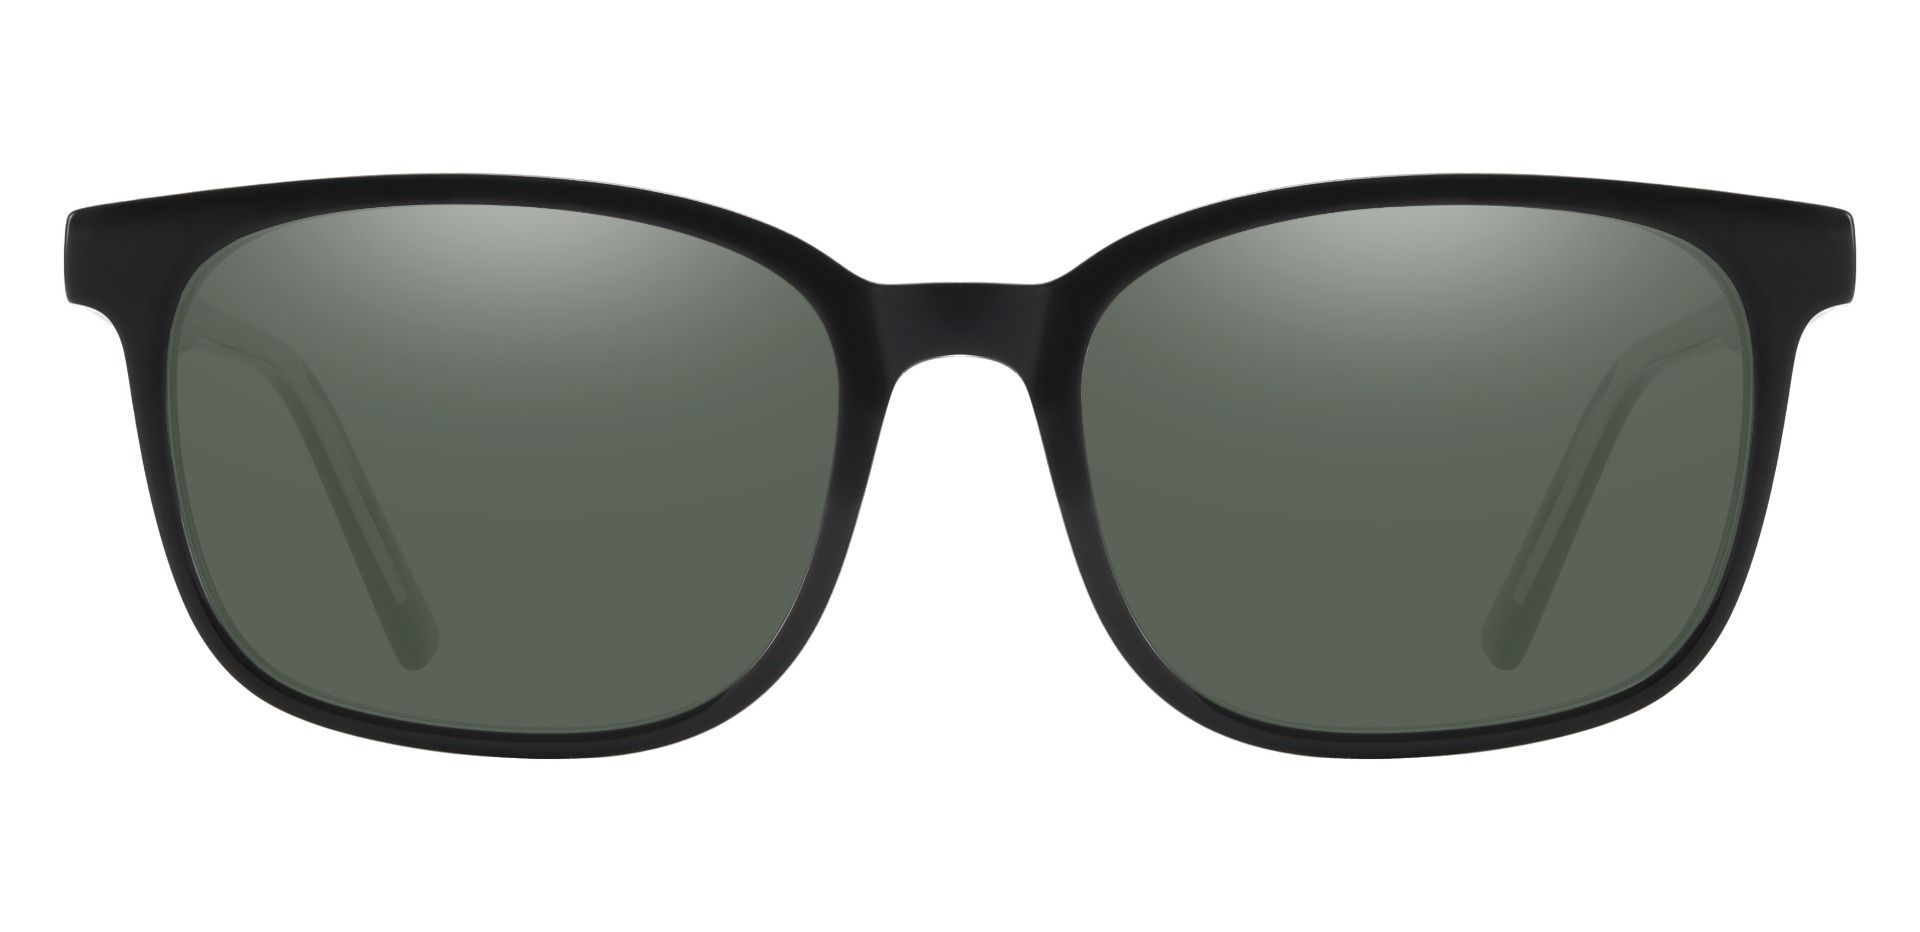 Windsor Rectangle Lined Bifocal Sunglasses - Black Frame With Green Lenses